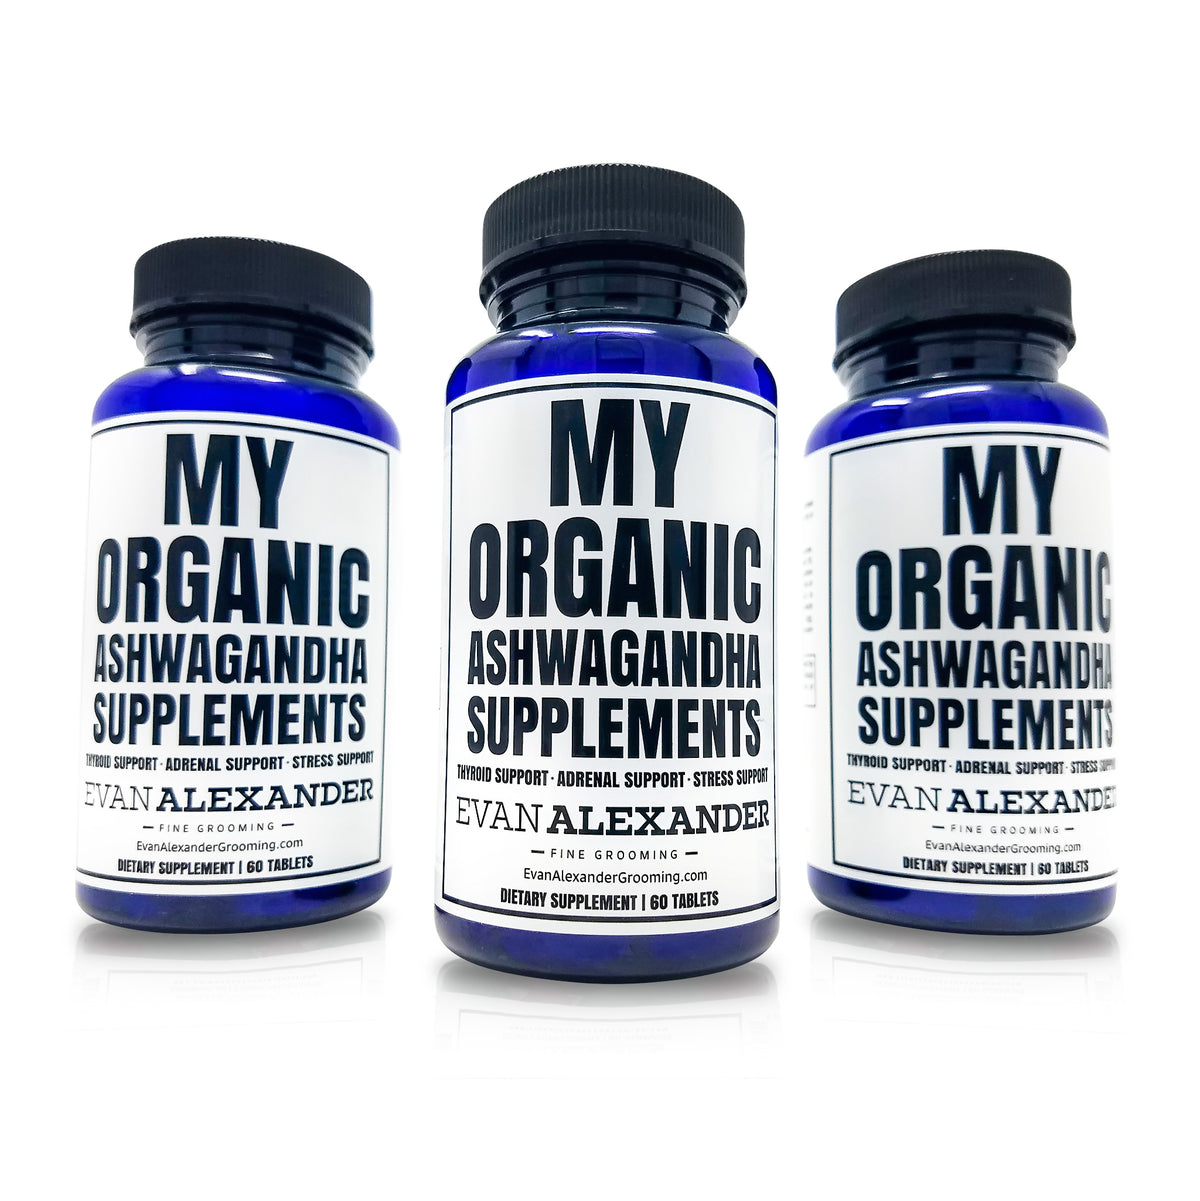 MY Organic Ashwagandha Supplements